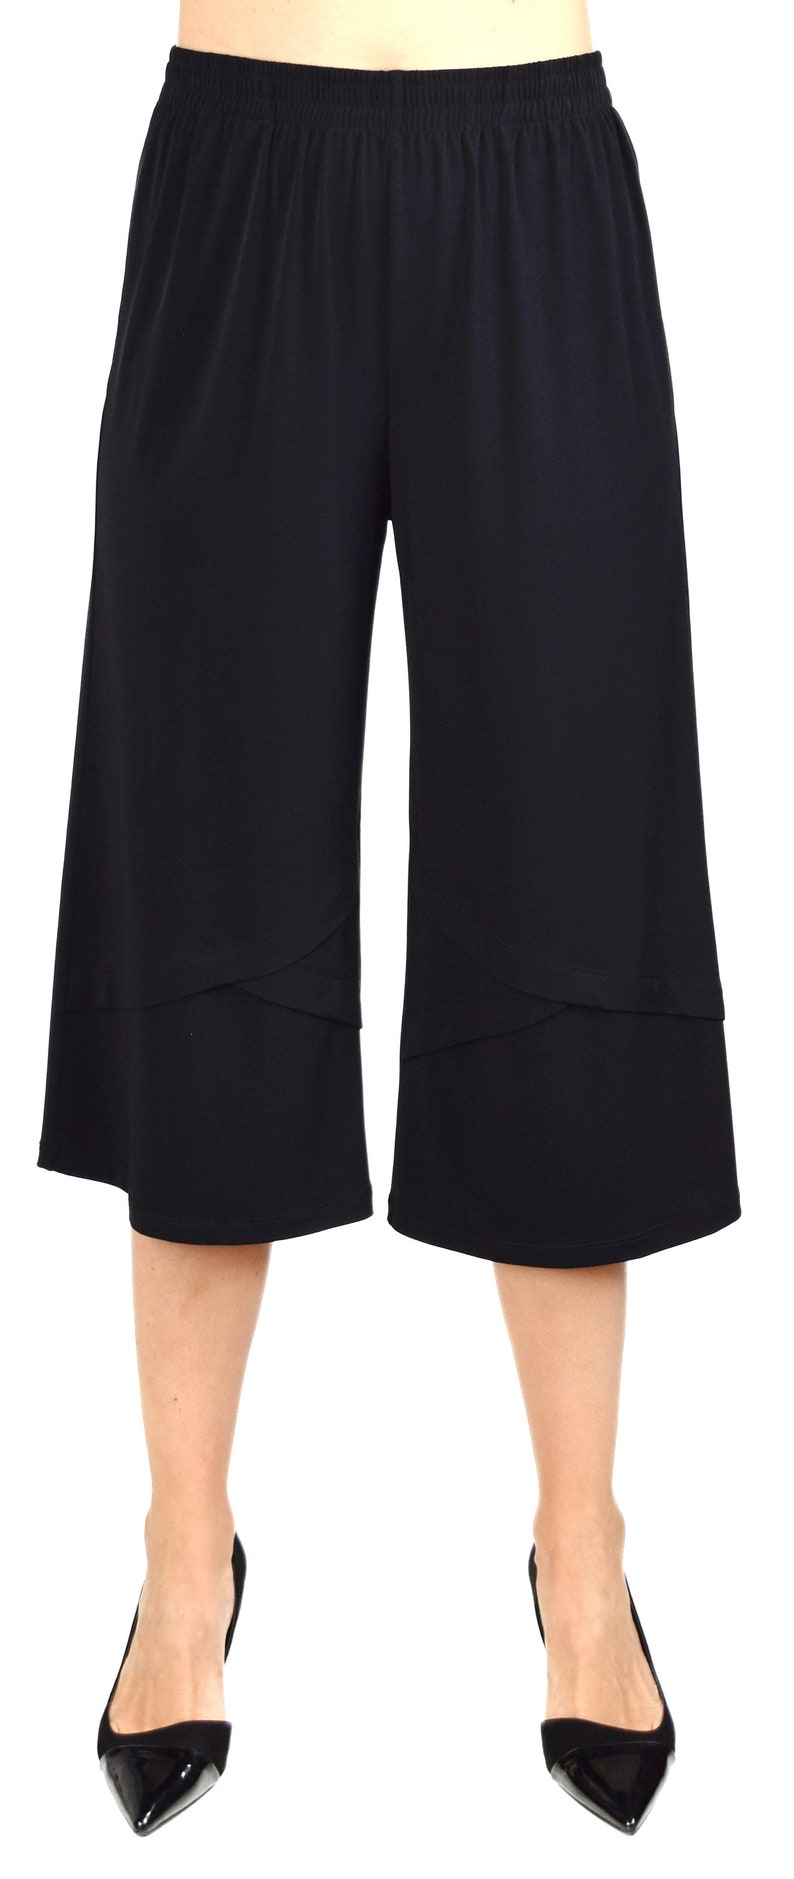 New Designer Plus Size Capri Pants with side pockets. | Etsy